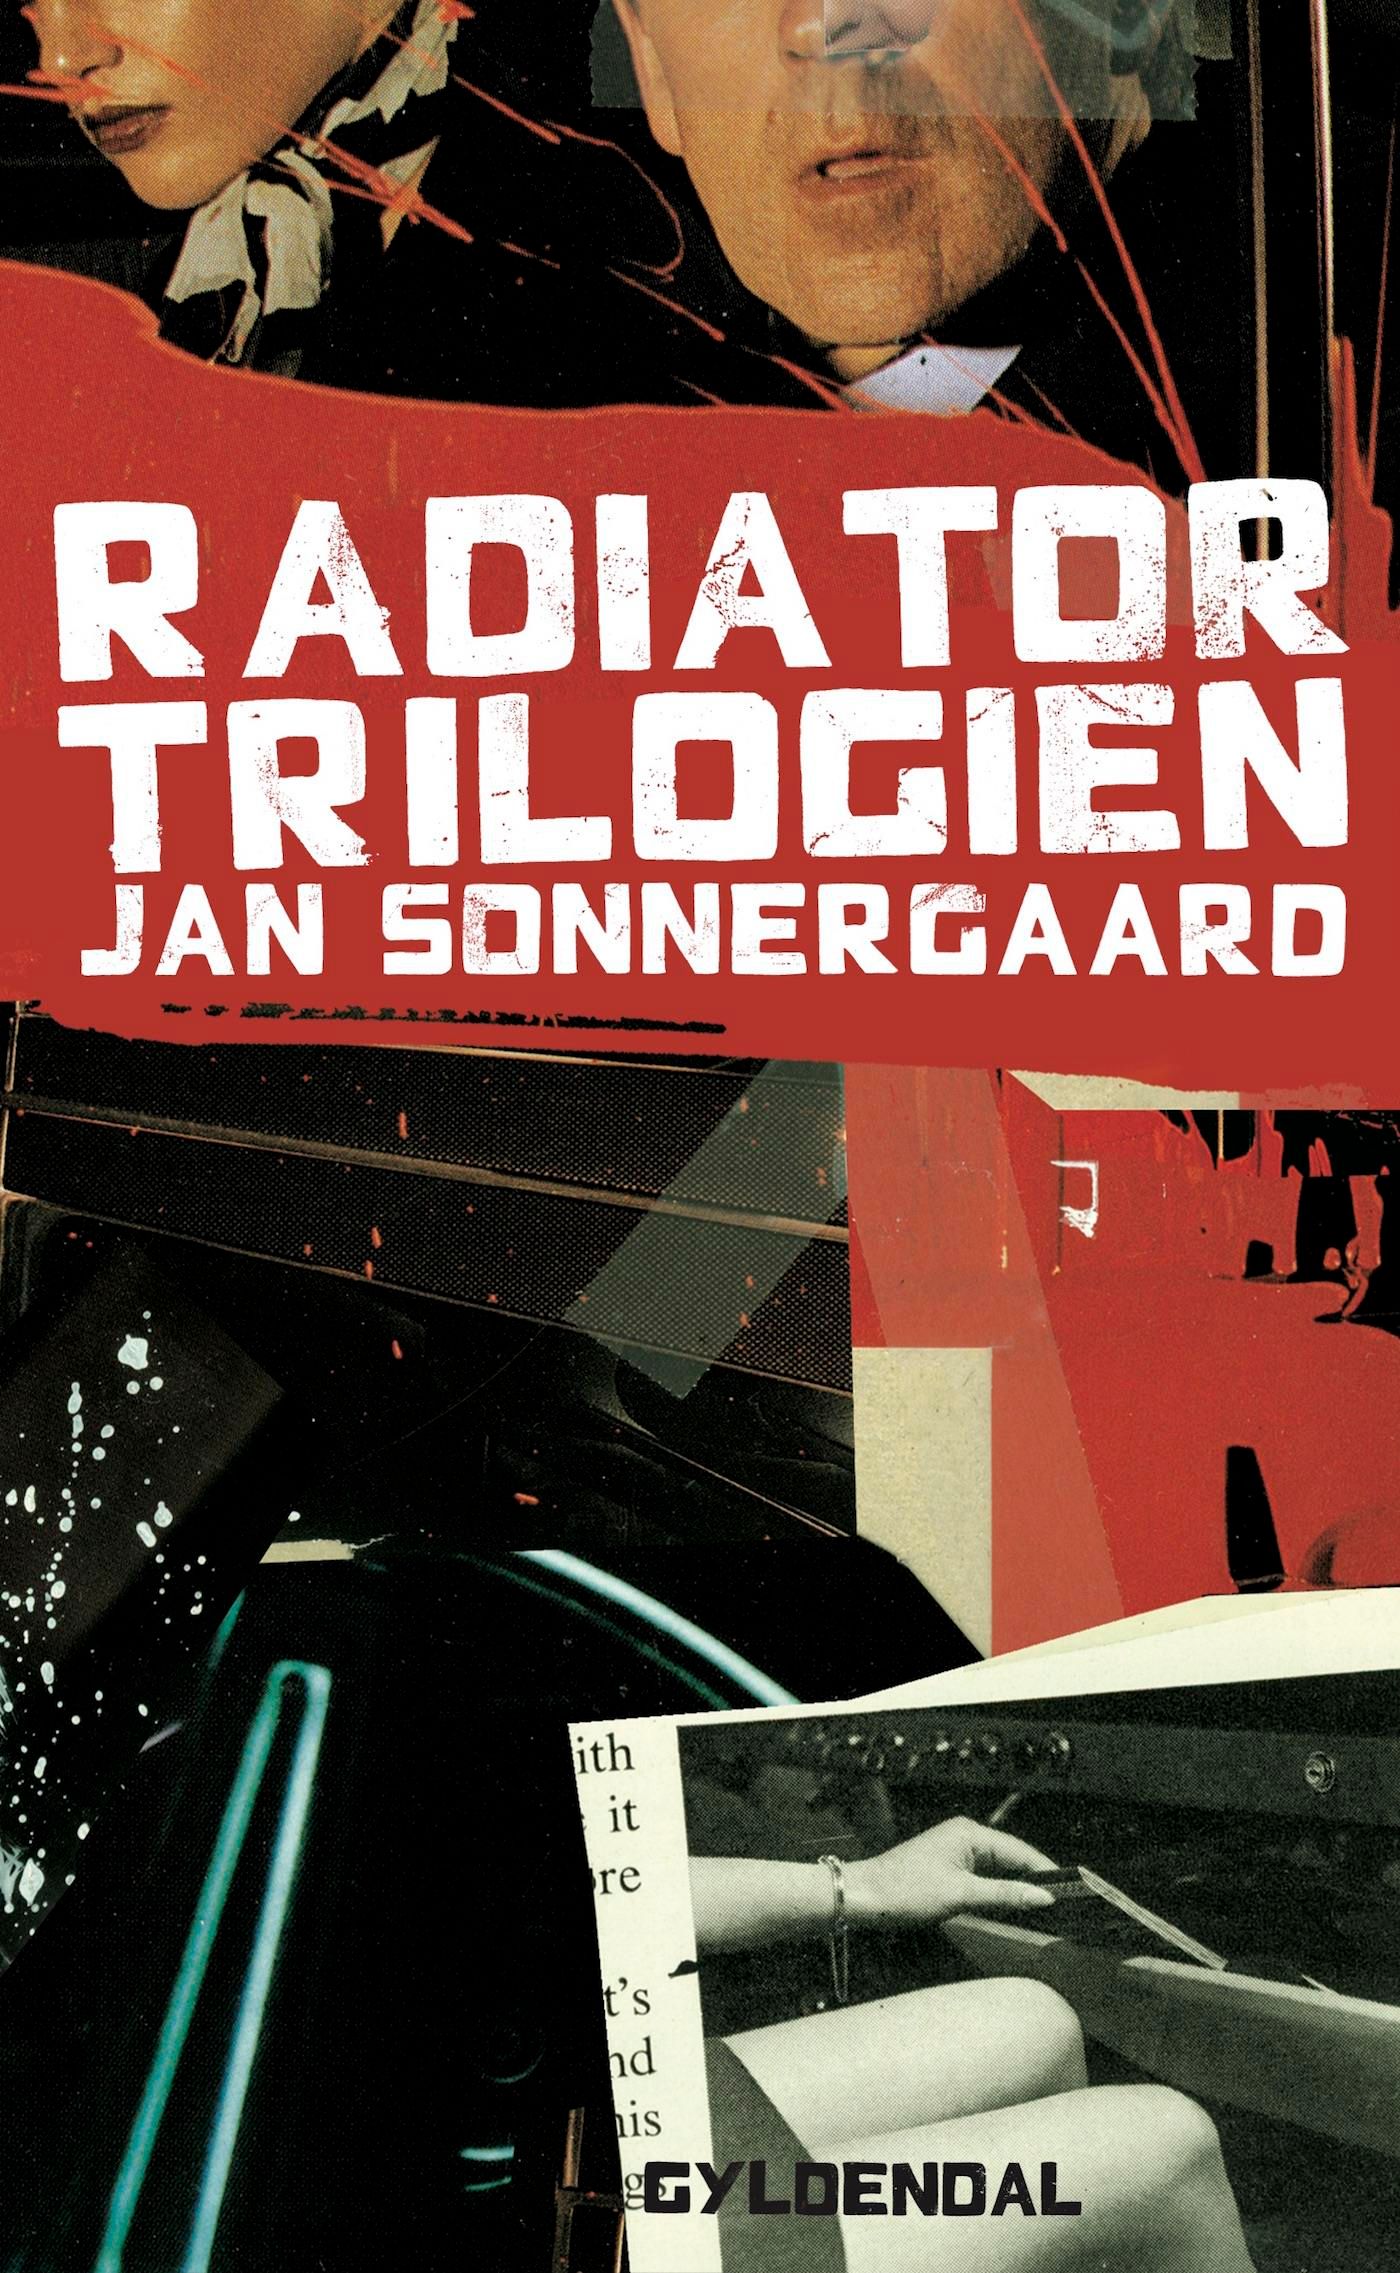 Radiatortrilogien, eBook by Jan Sonnergaard